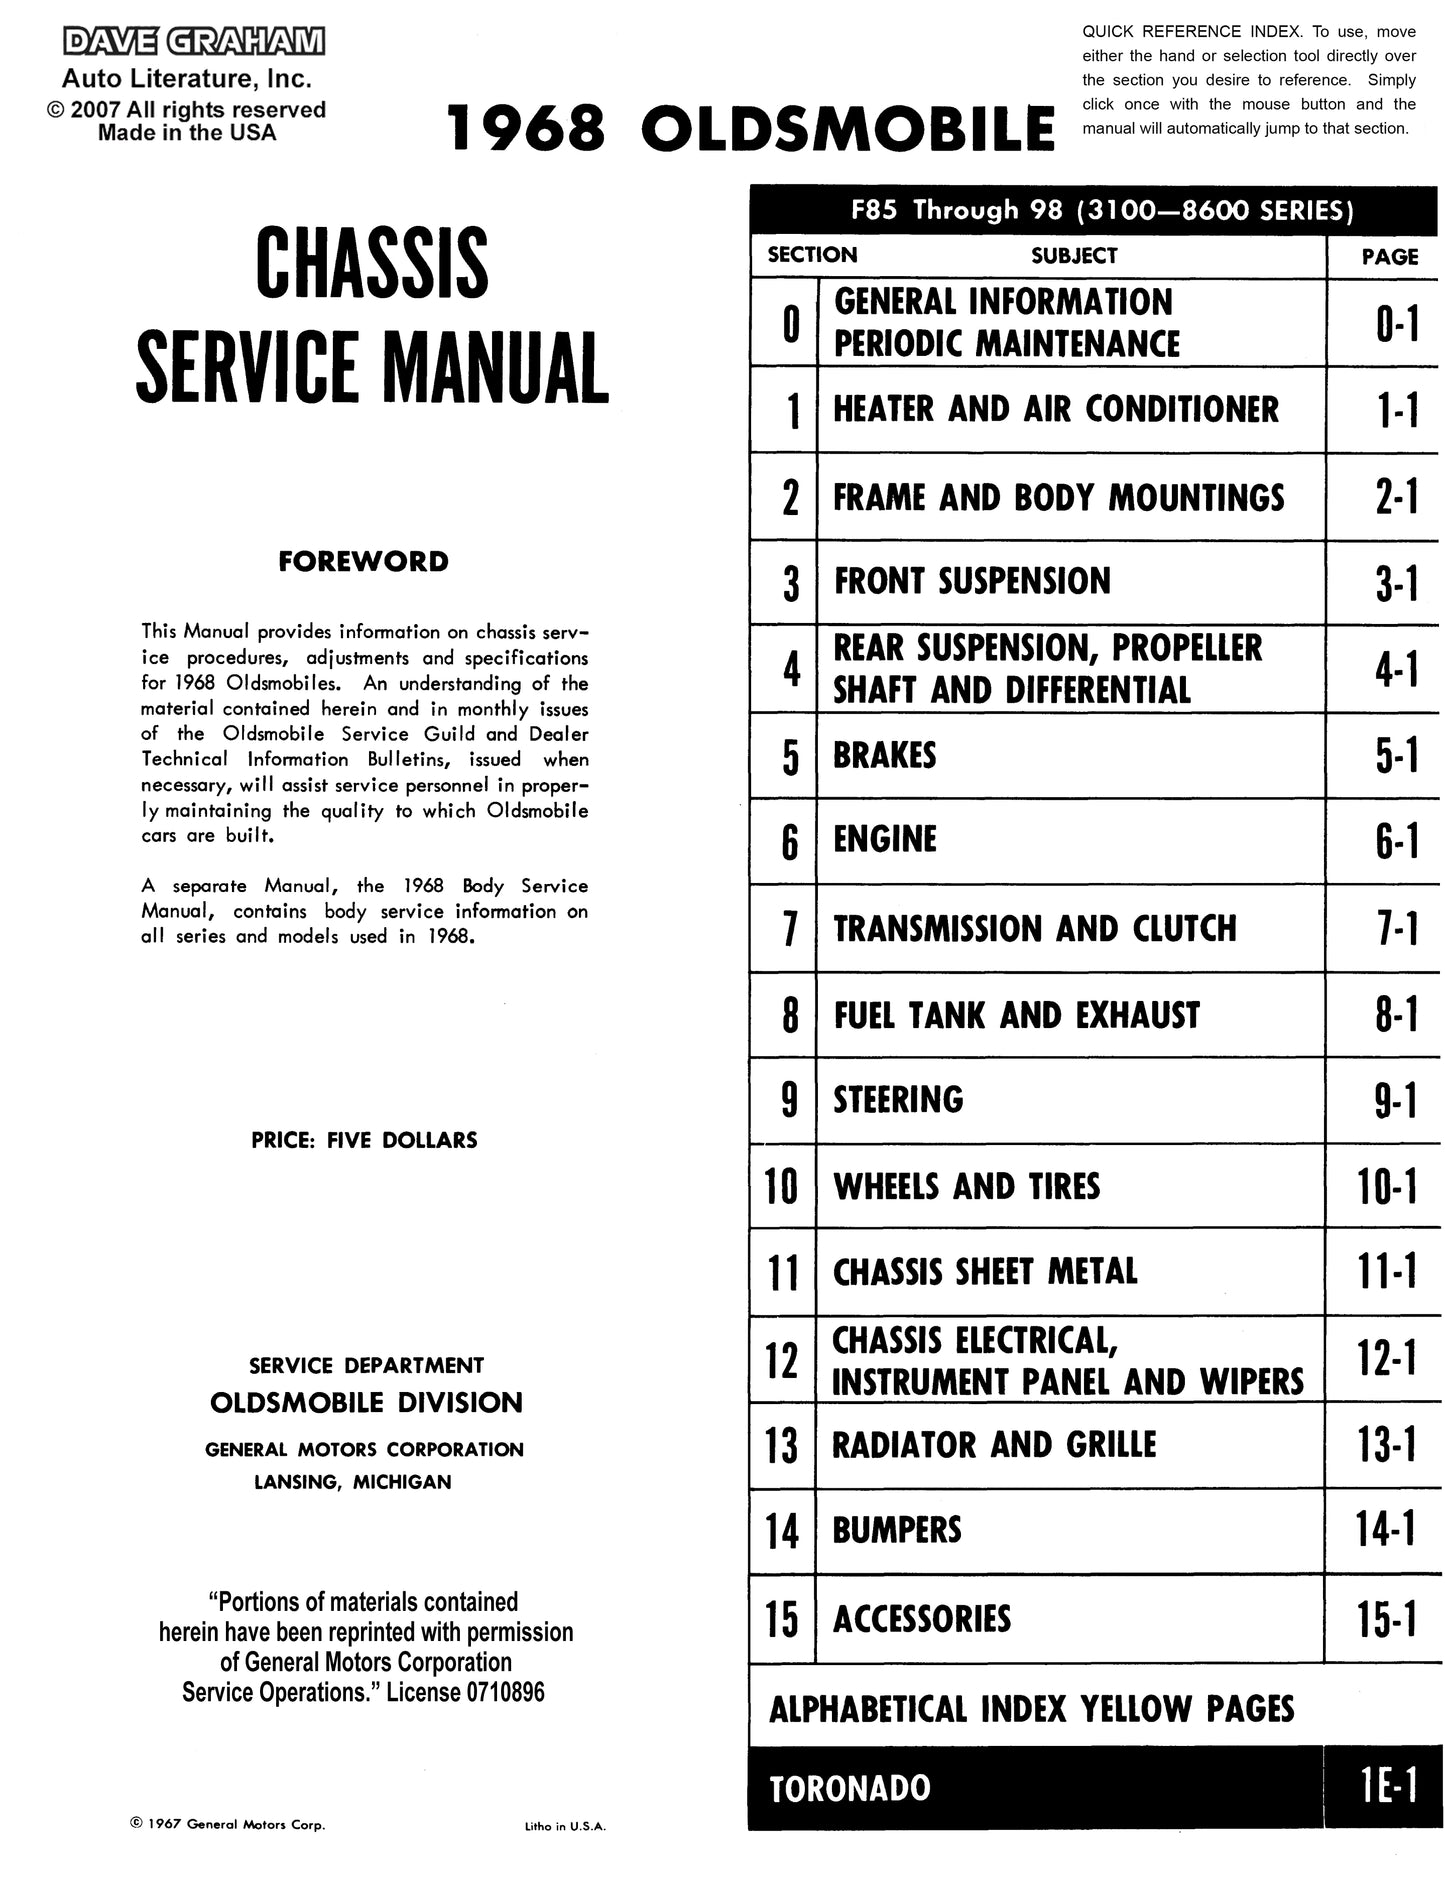 1968 Oldsmobile Shop Manual & Body Manual- All Models